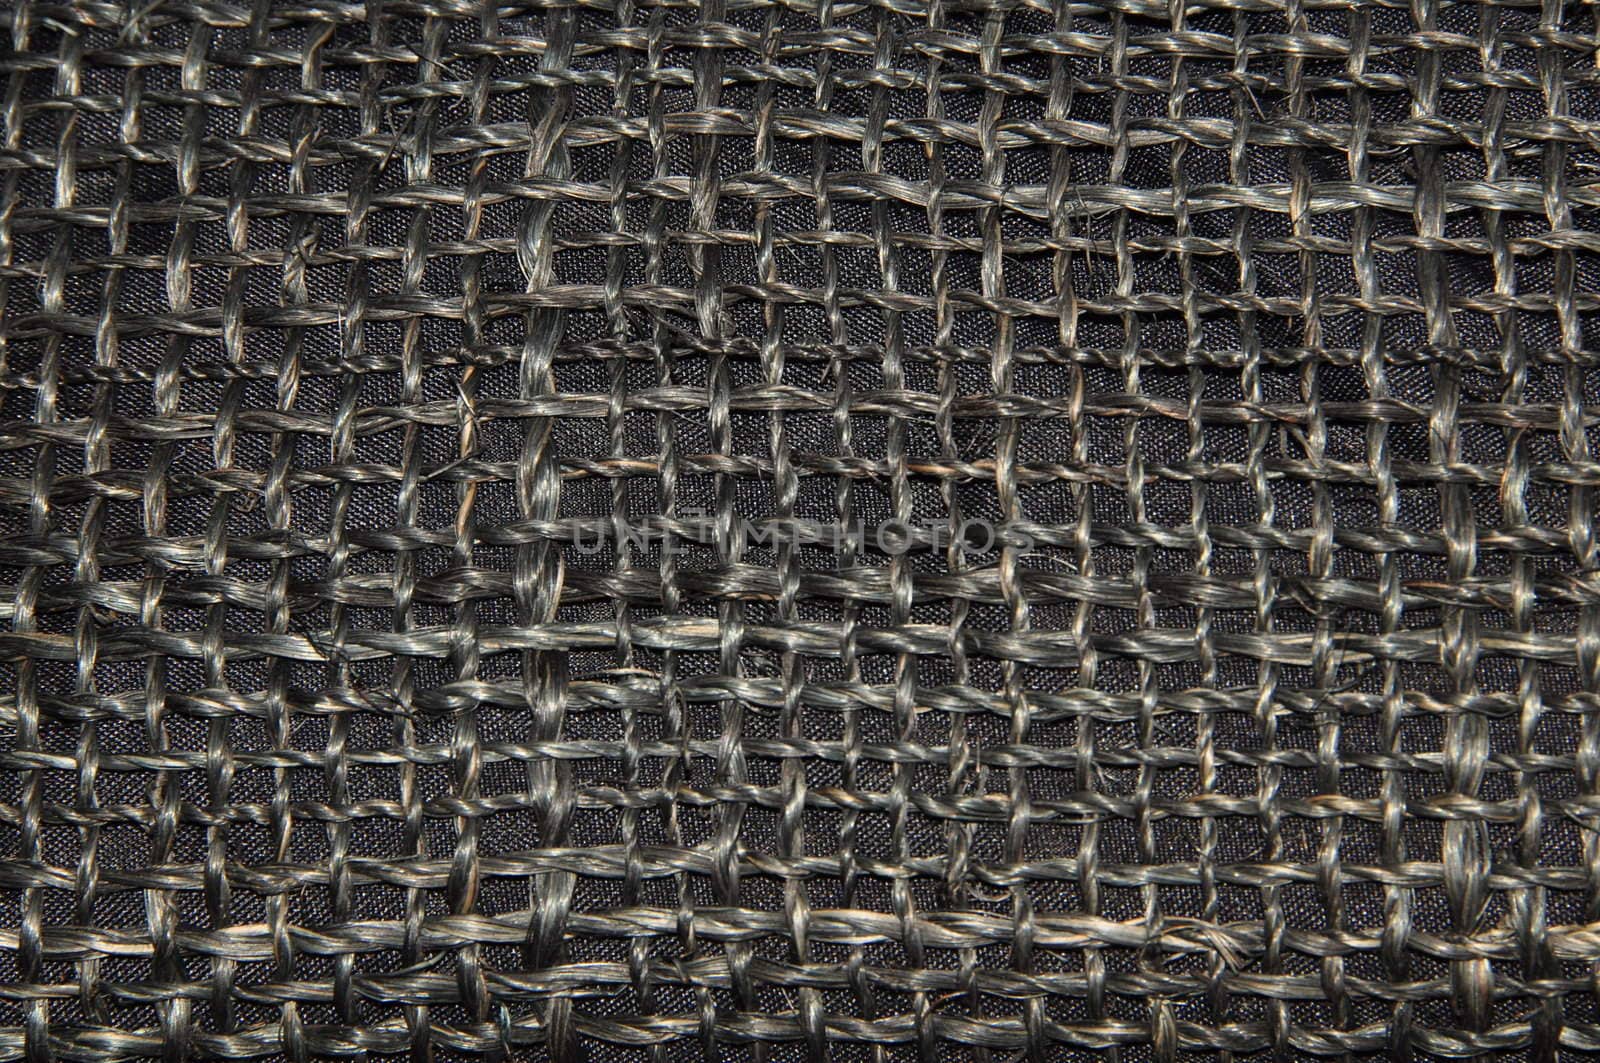 black fabric close up